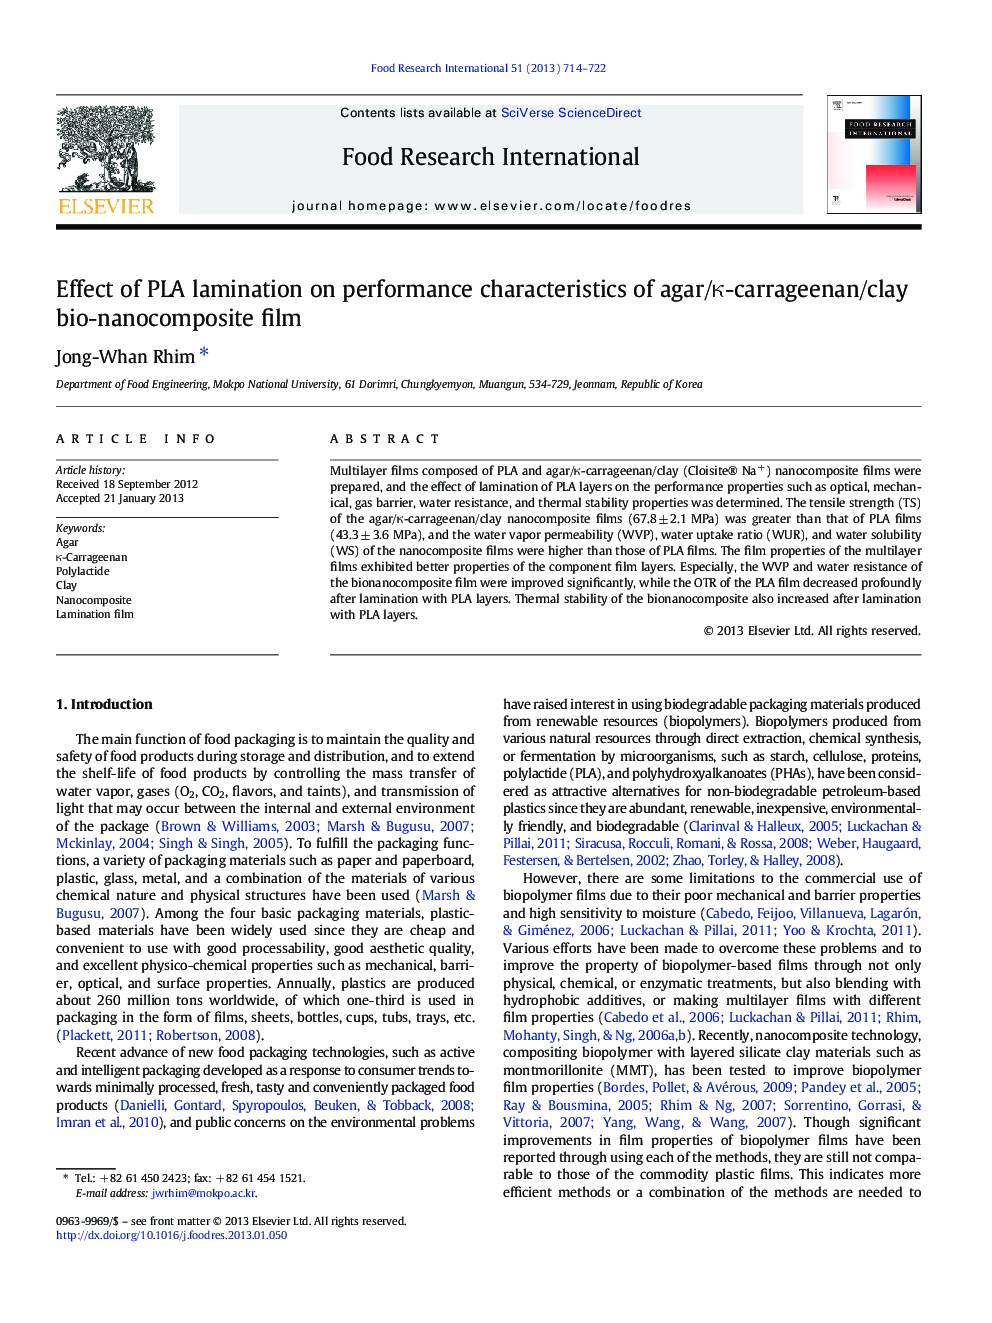 Effect of PLA lamination on performance characteristics of agar/Îº-carrageenan/clay bio-nanocomposite film